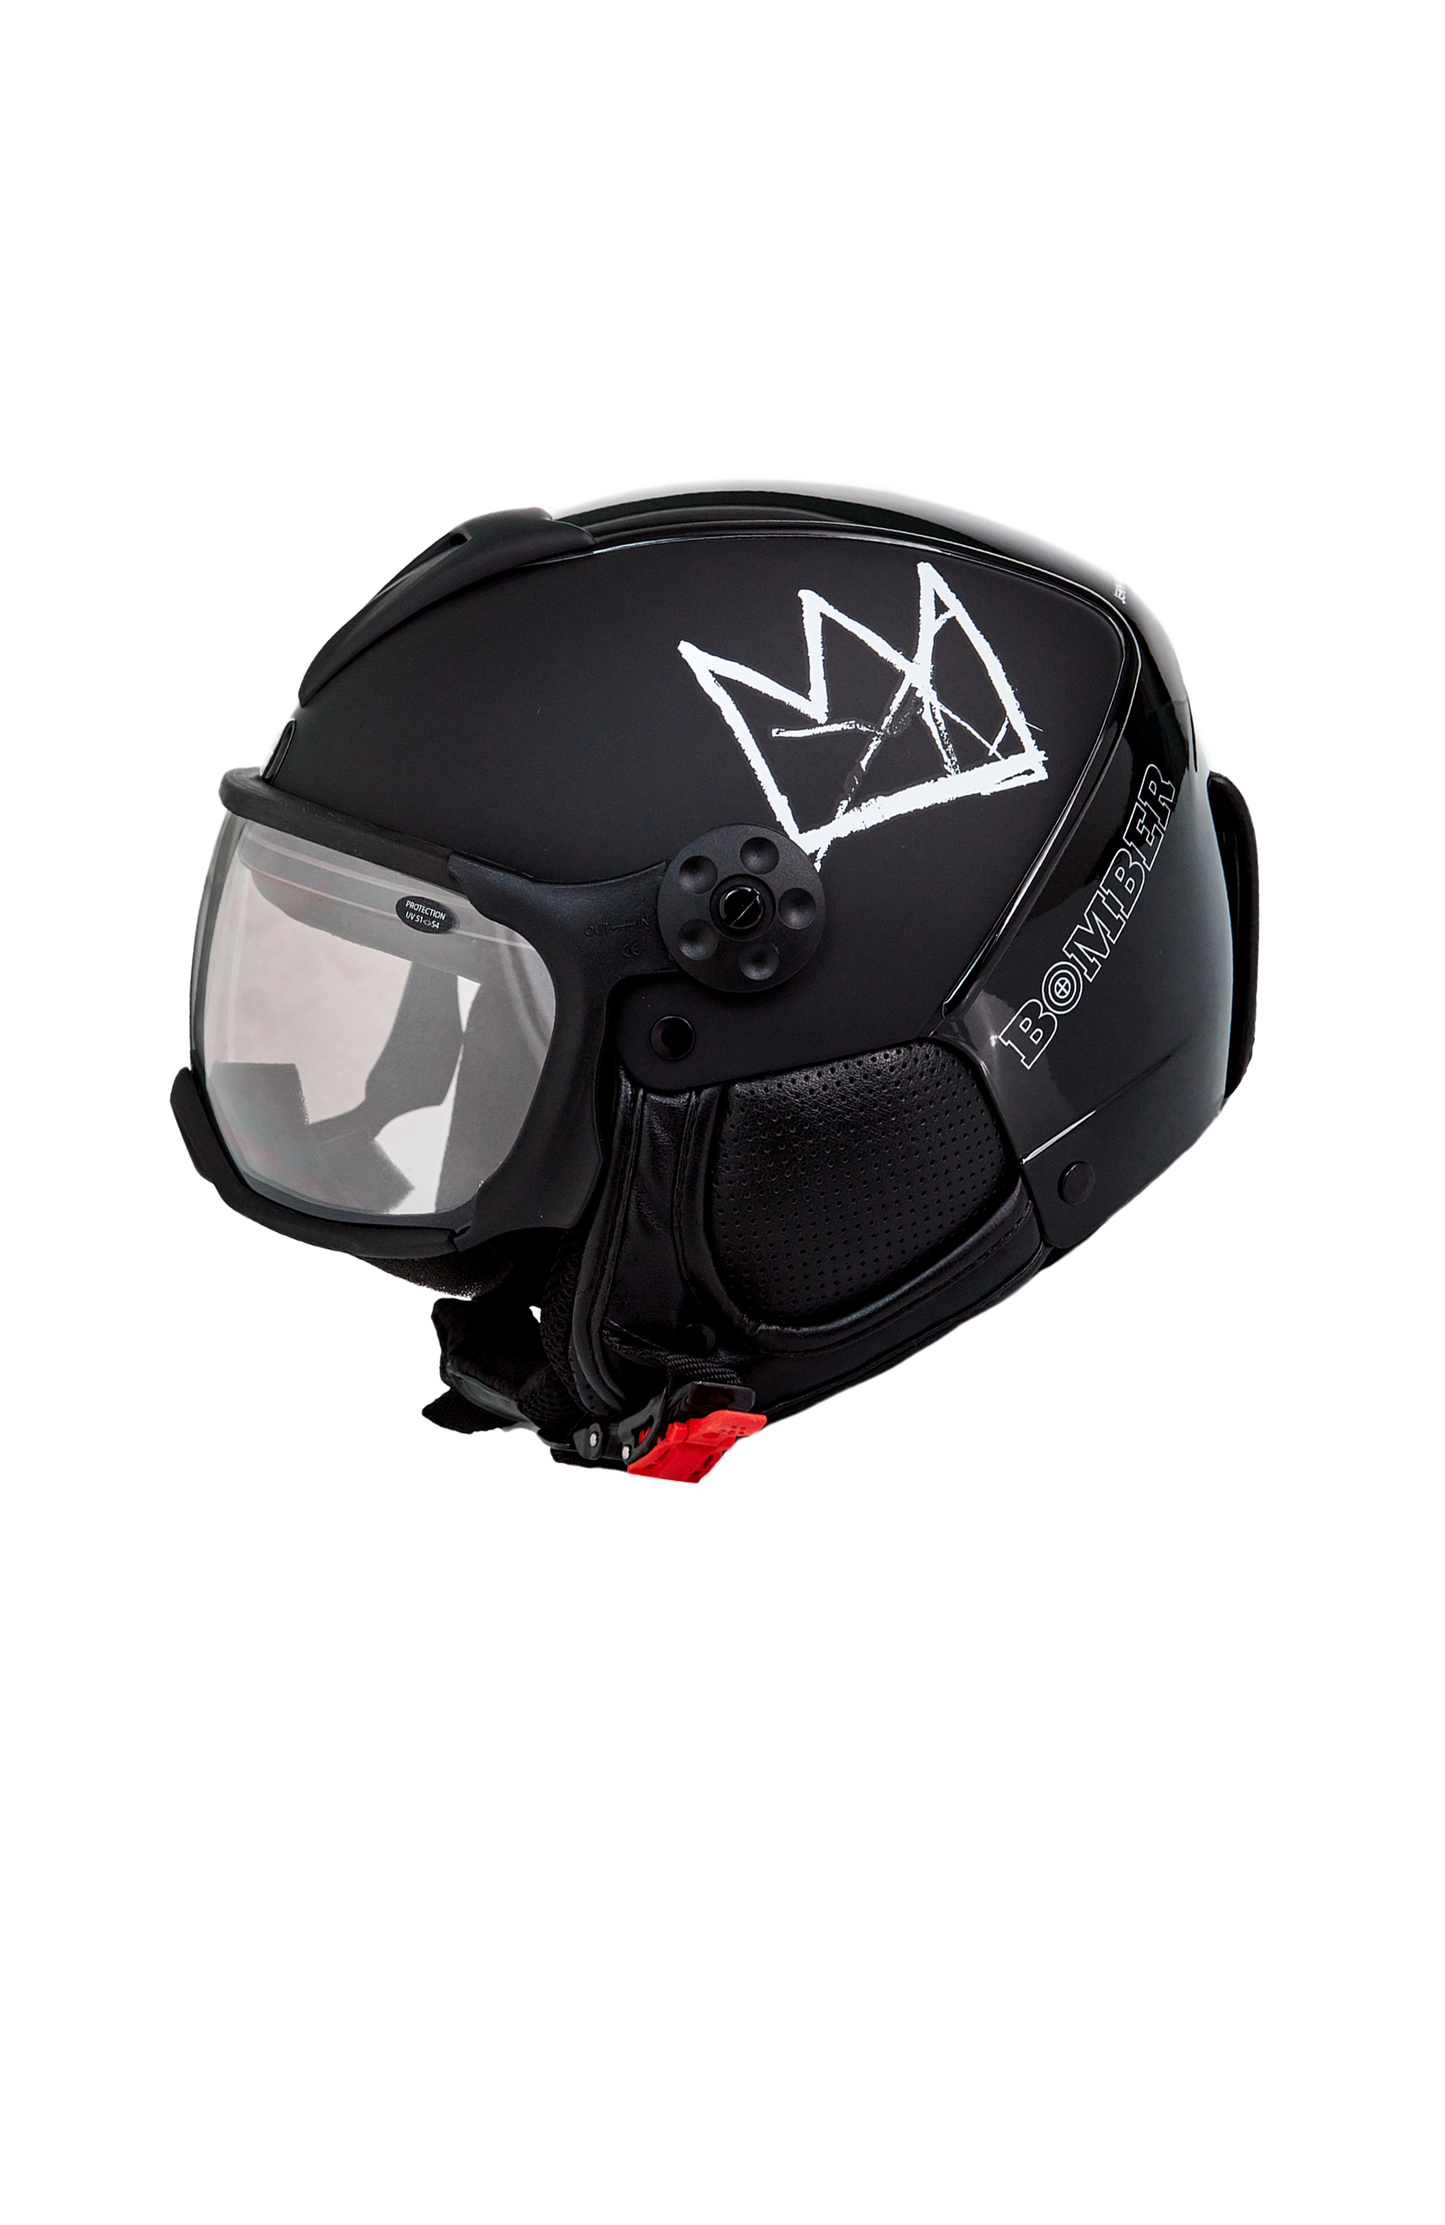 Basquiat Black Crown Helmet